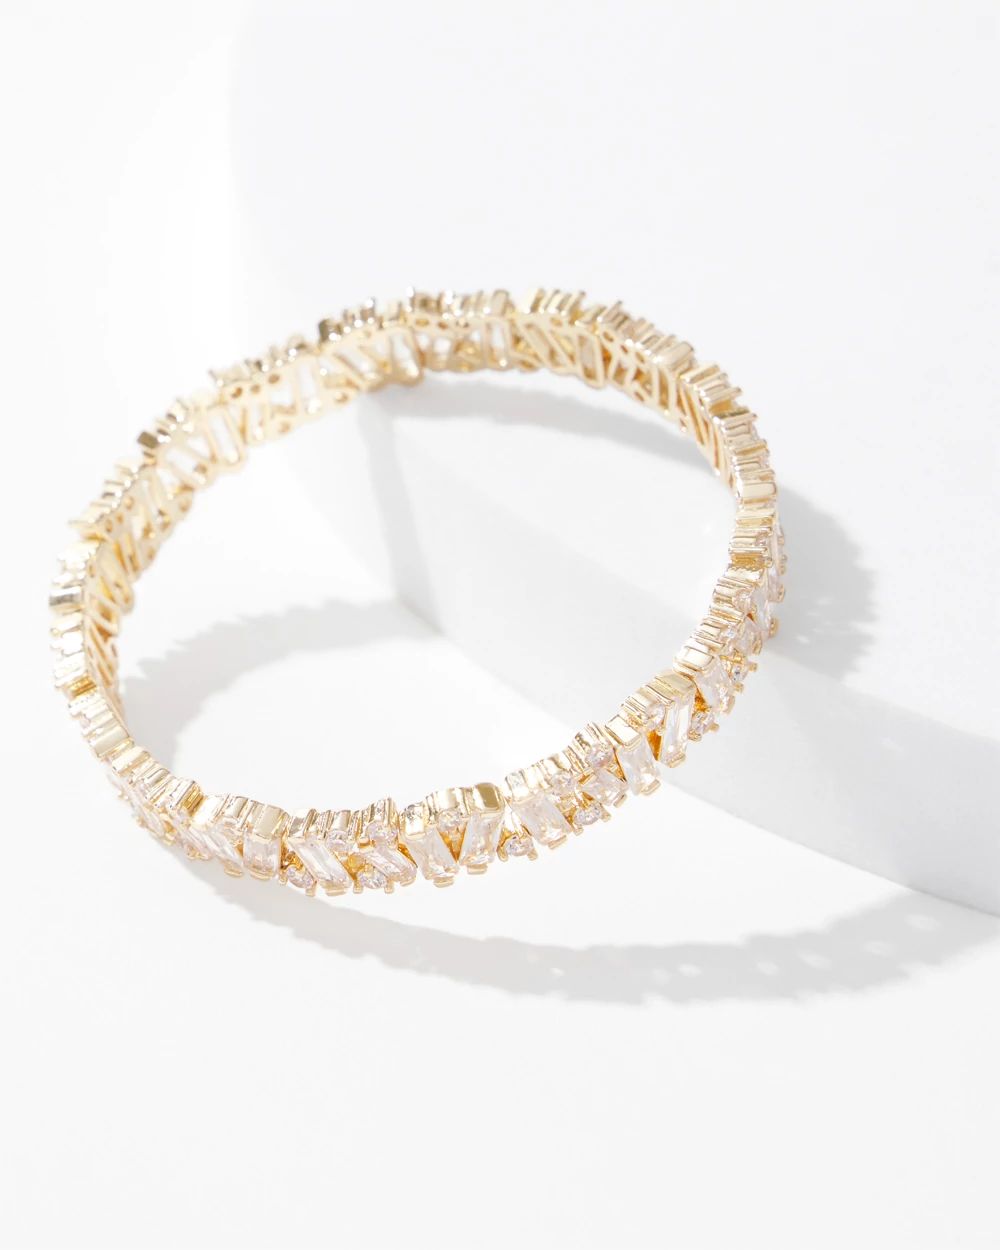 Gold Crystal Baguette Stretch Bracelet click to view larger image.